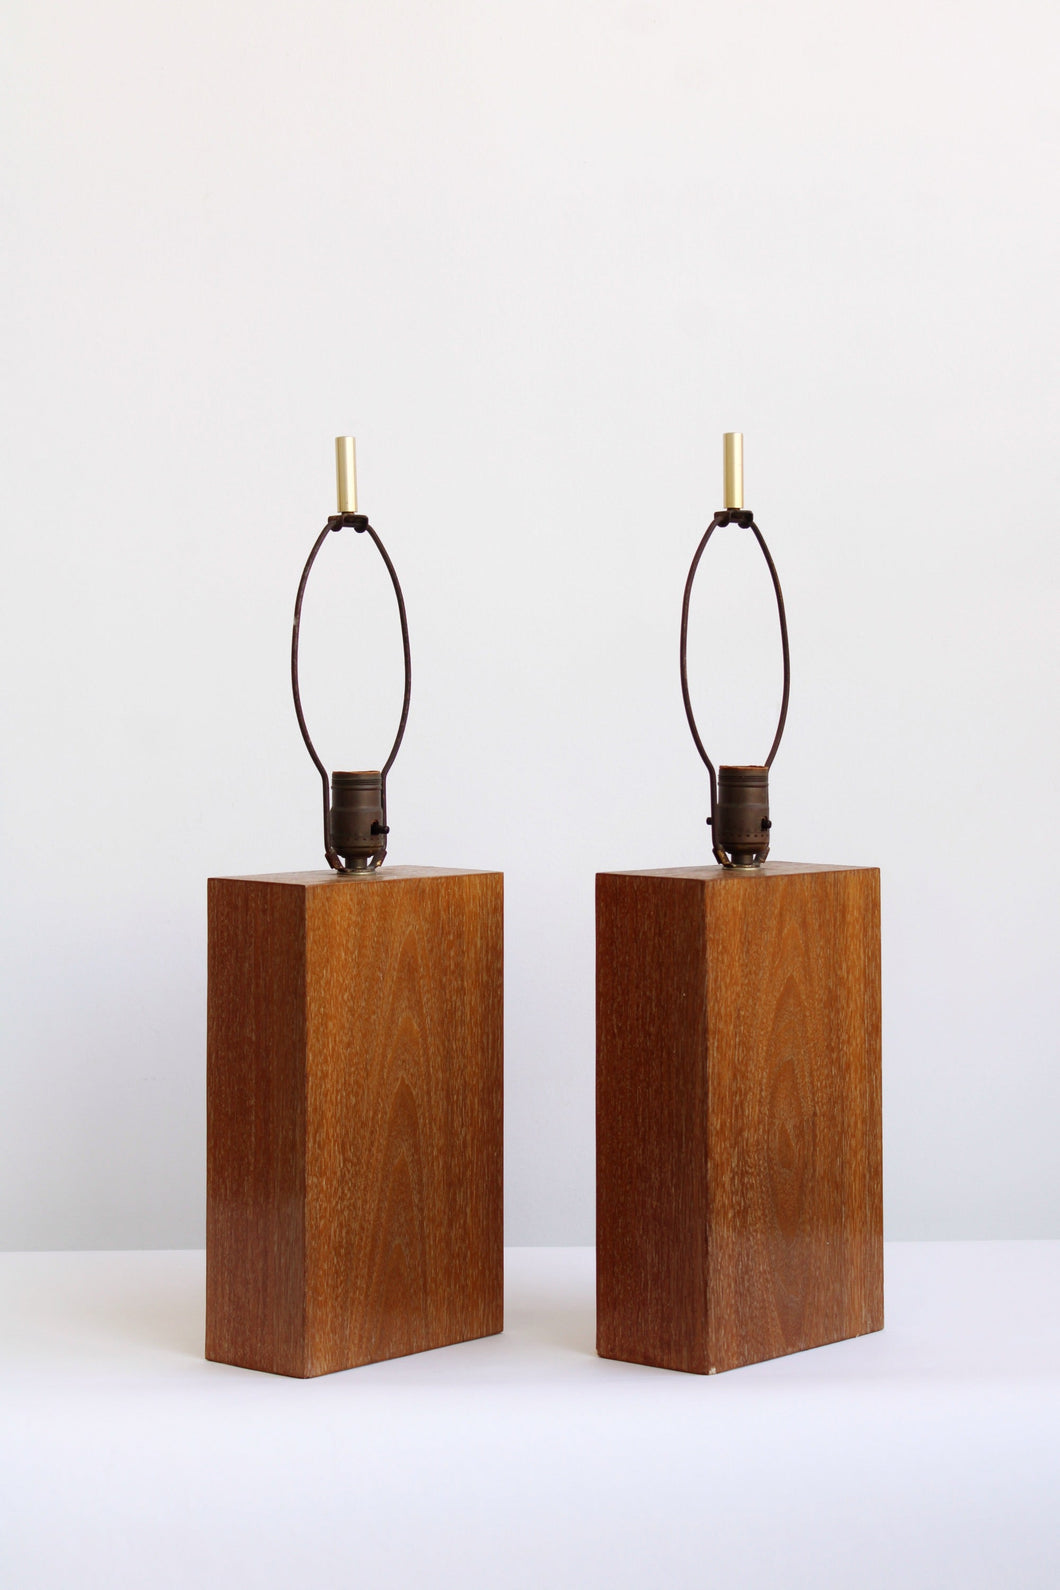 1950's Handmade Block Lamps